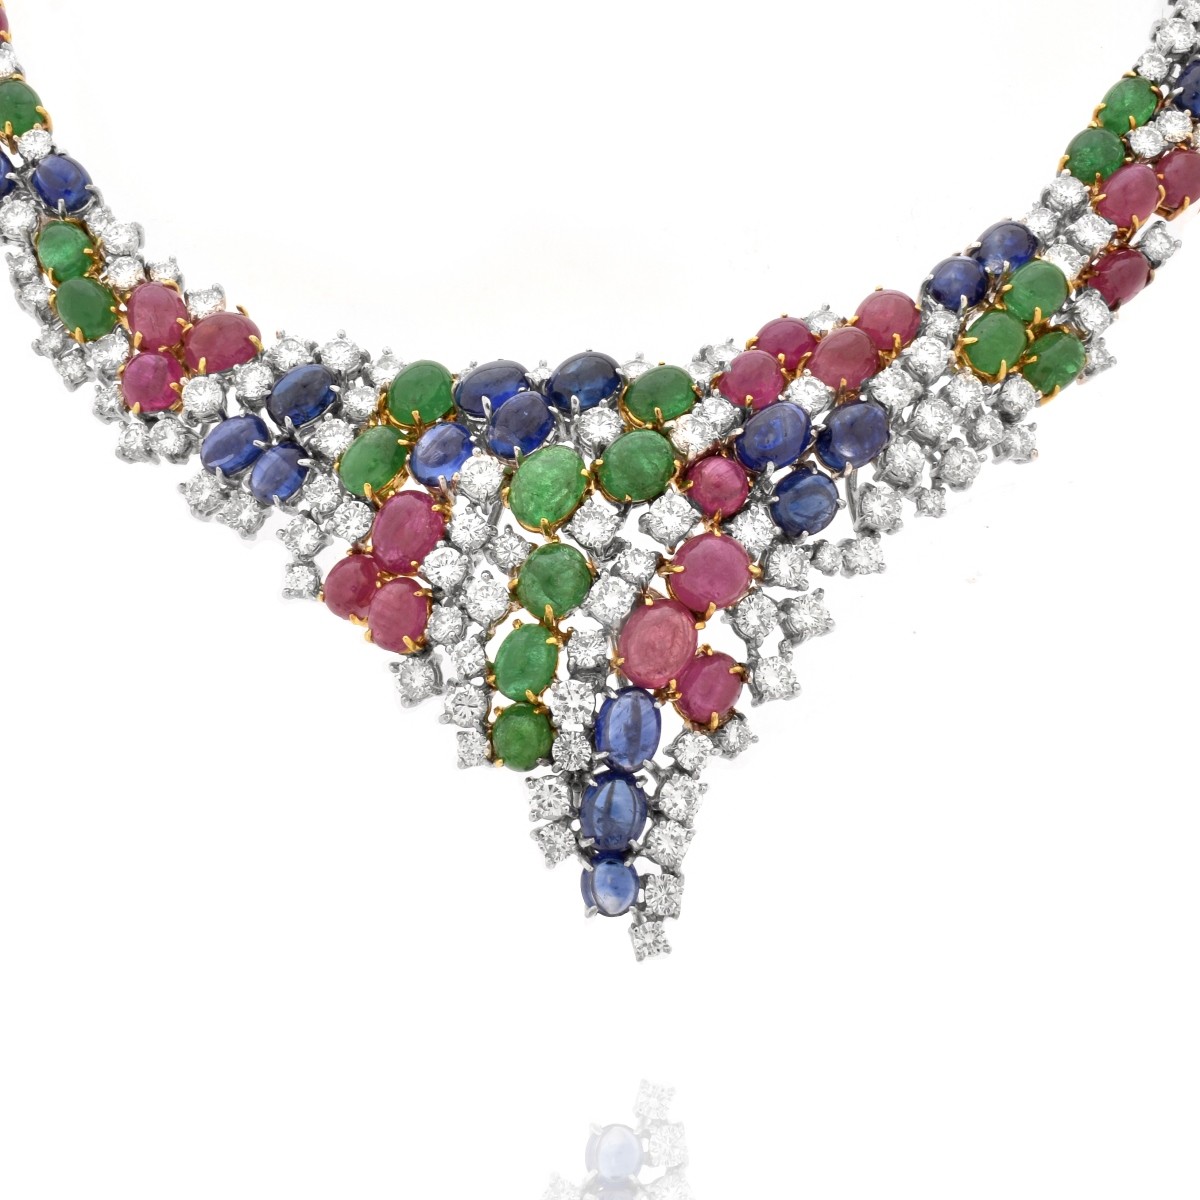 Gemstone, Diamond and 18K Necklace